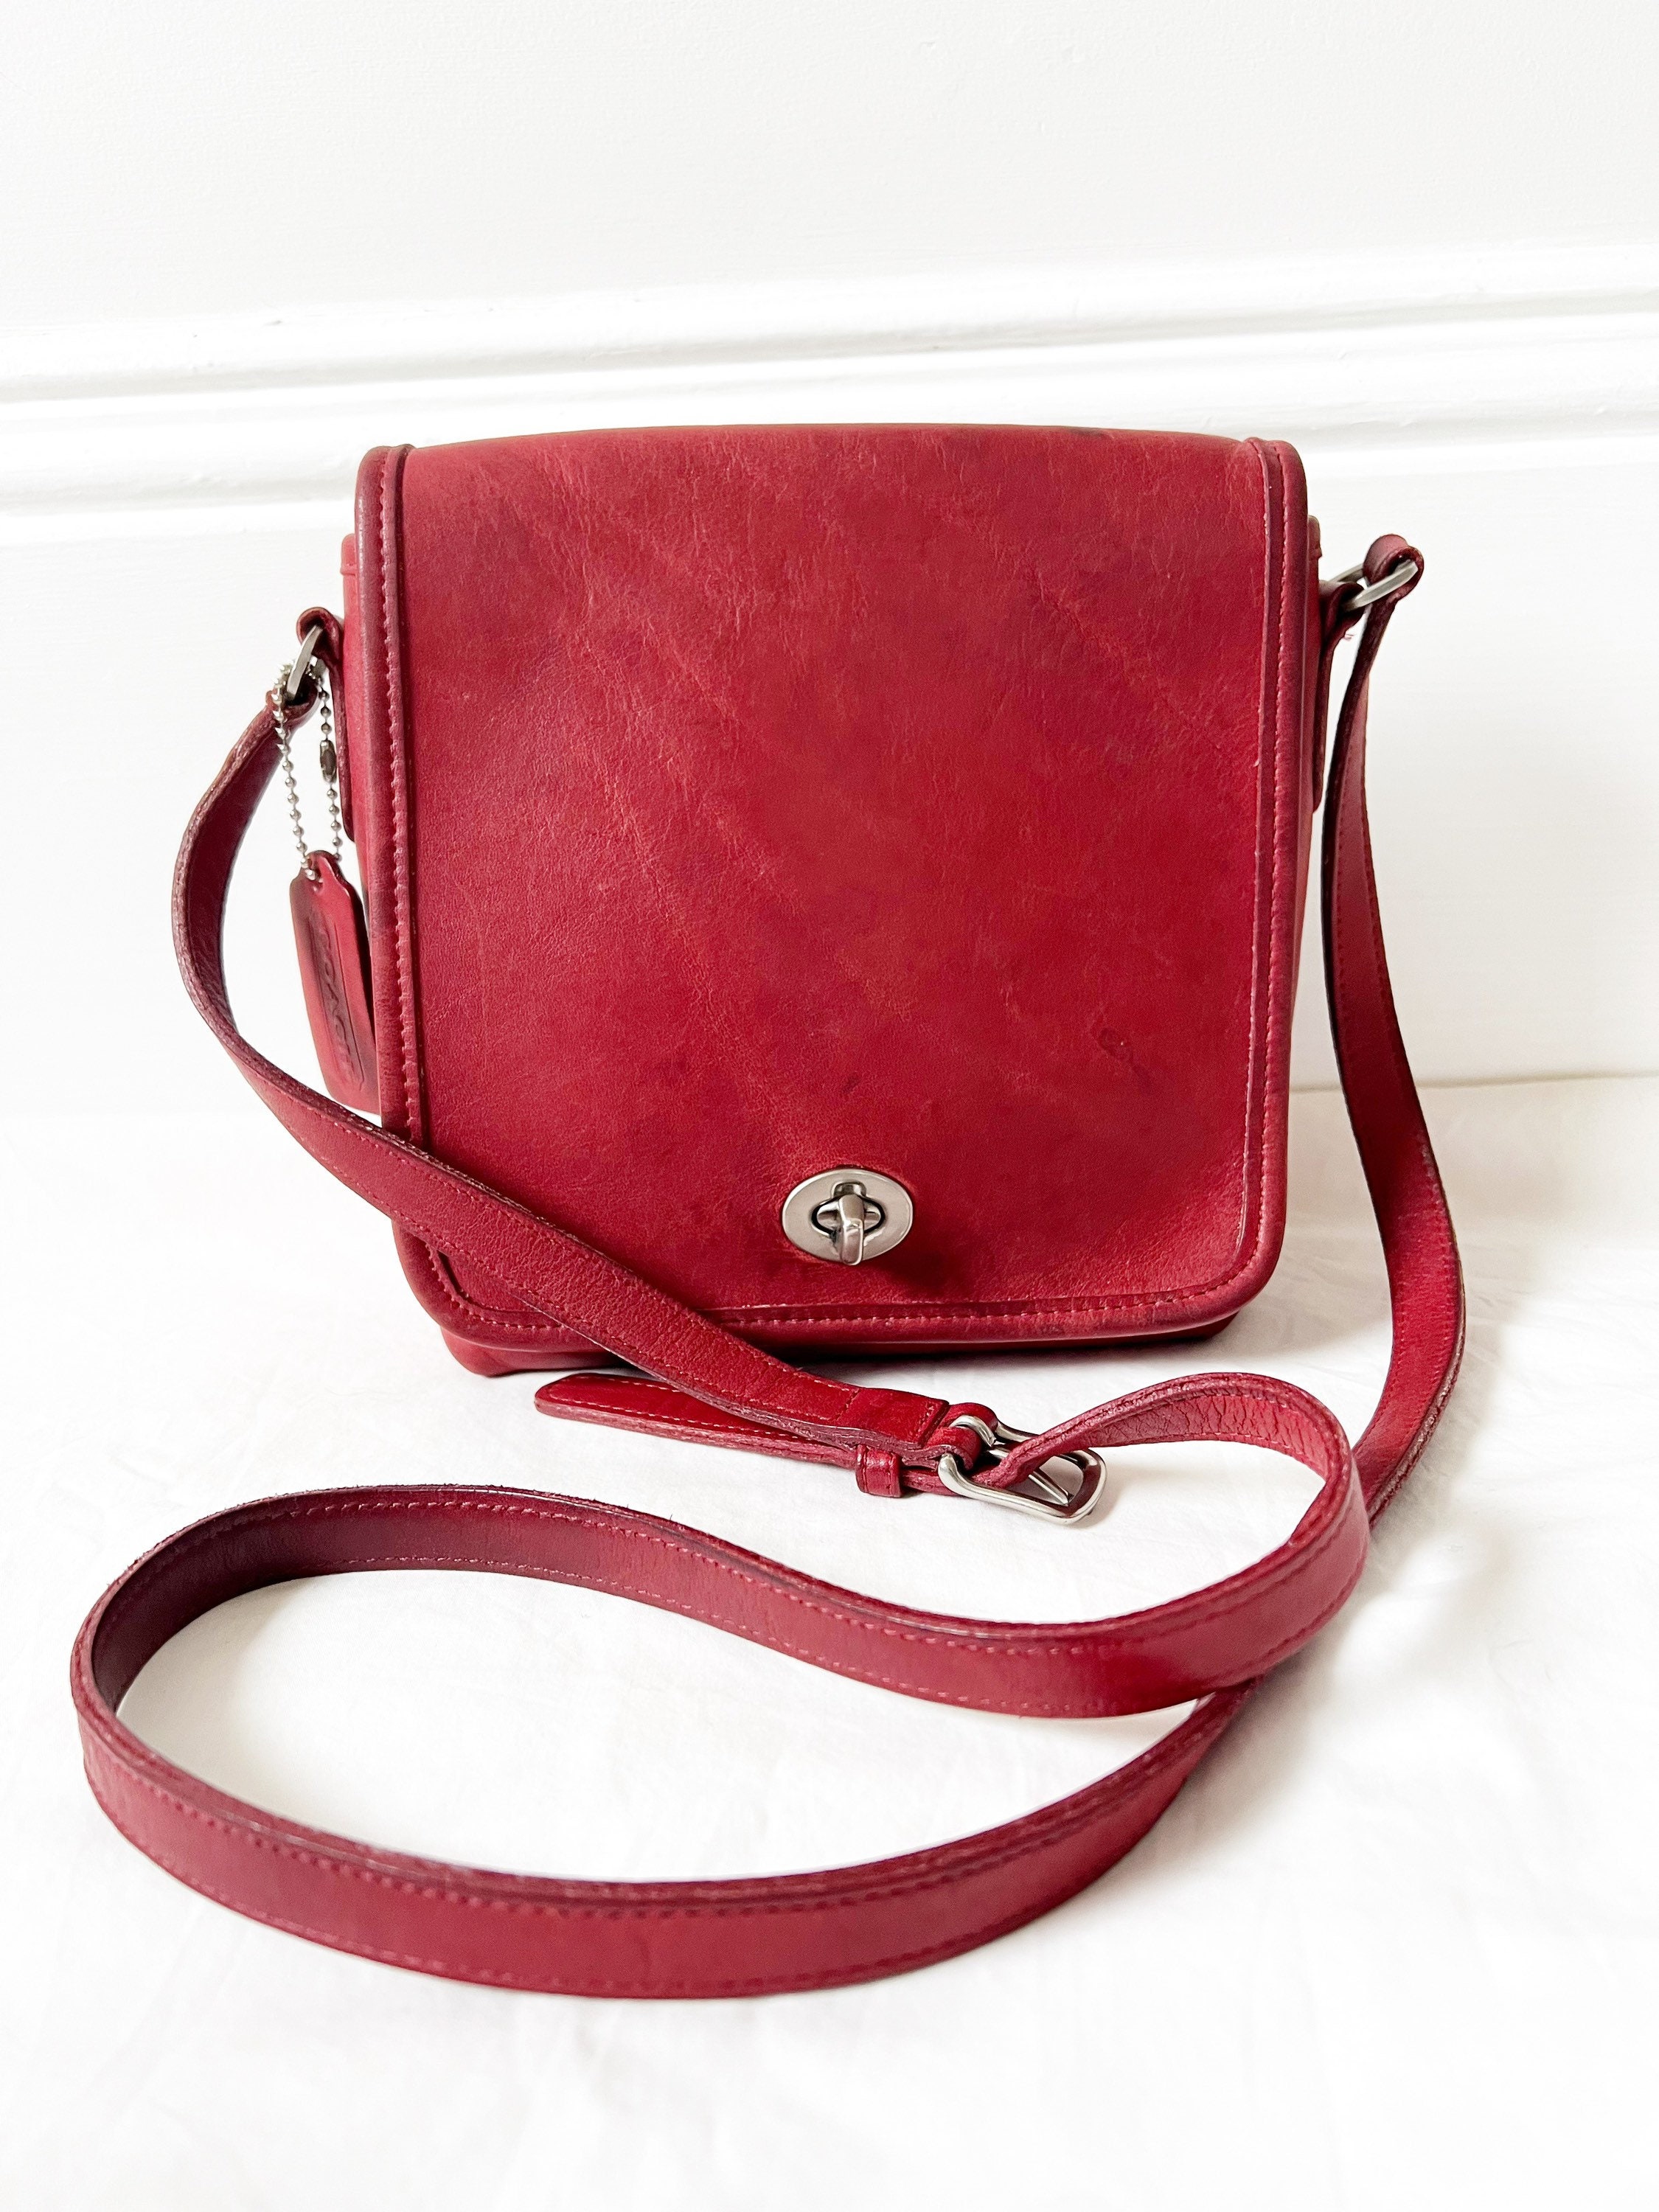 Vintage Coach Red Companion Flap #9076 Bag Talk 